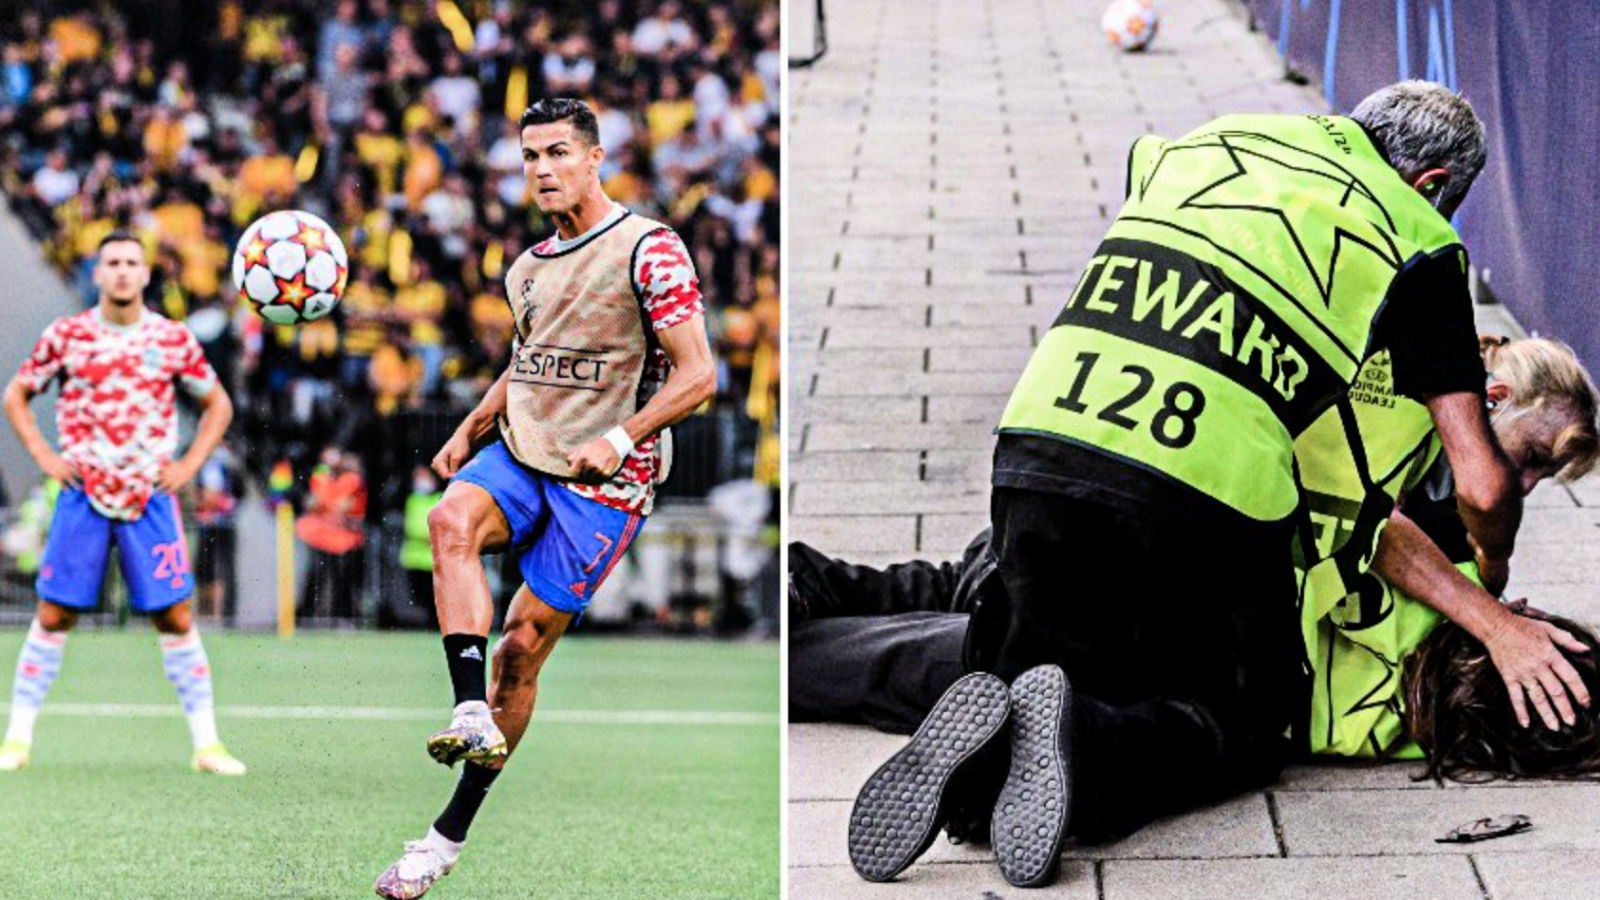 Watch the Cristiano Ronaldo free-kick that KOed a steward at Wankdorf Stadium